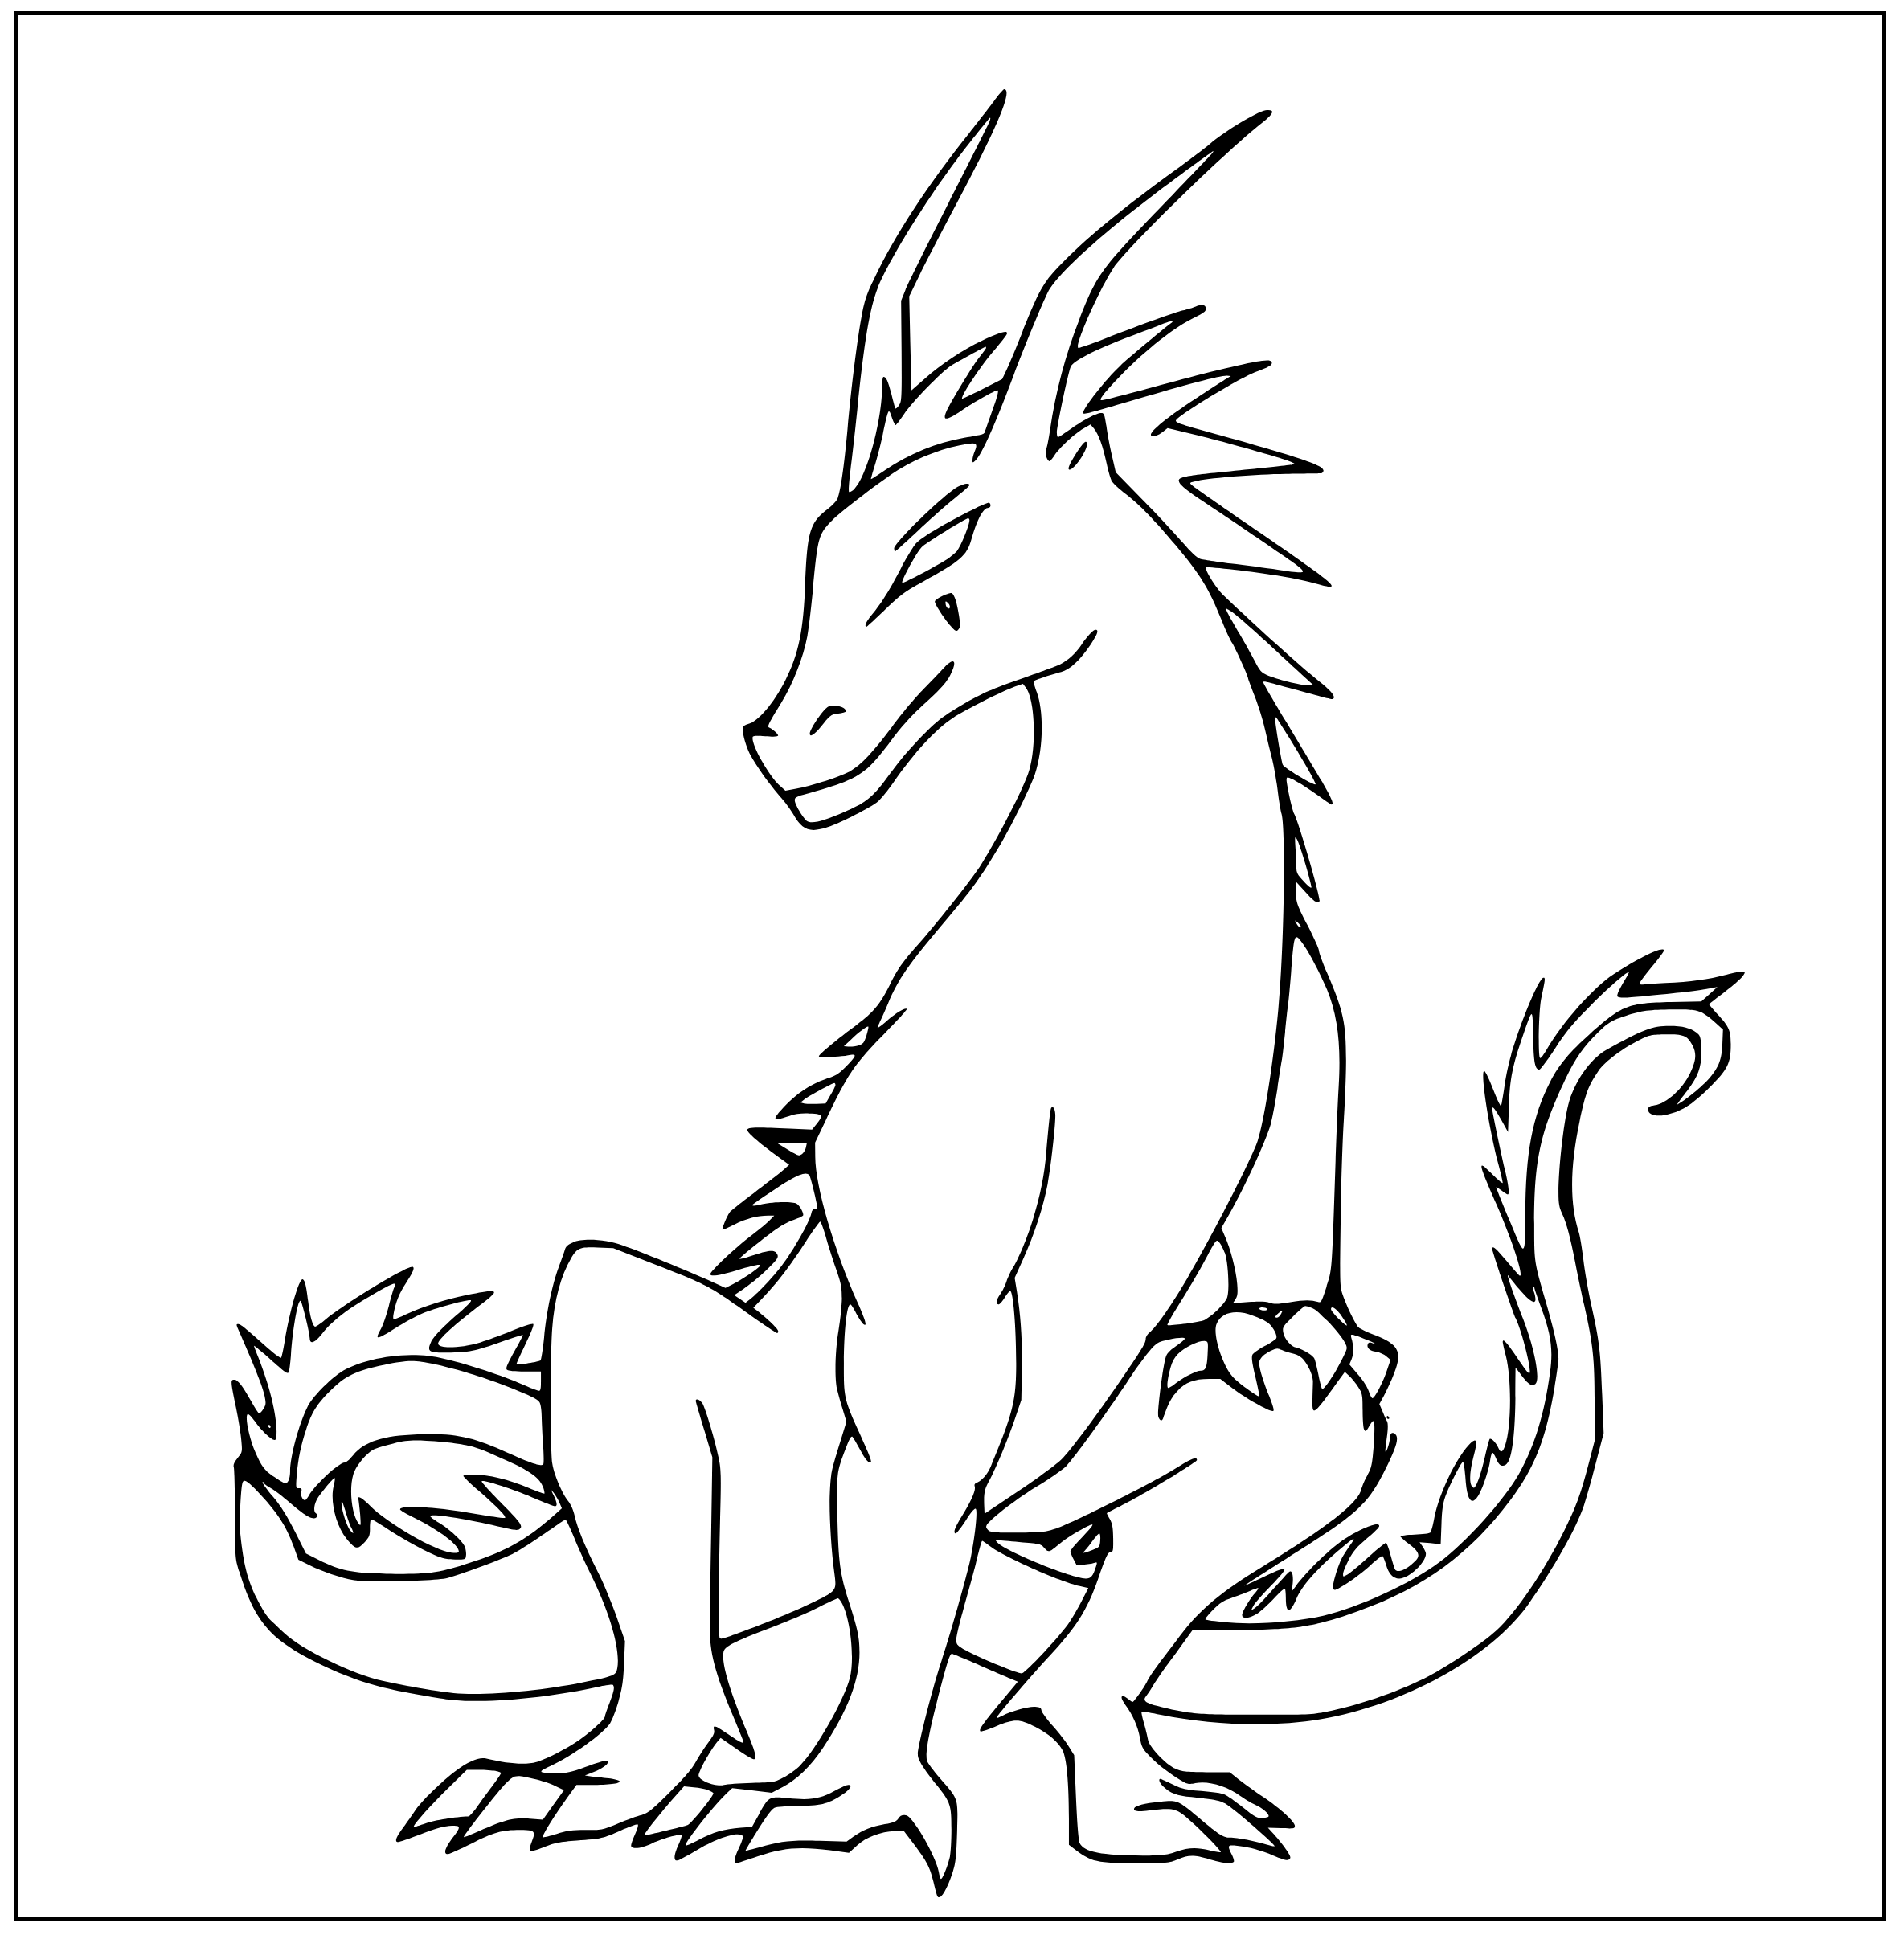 Printable a Huge Dragon Coloring Page for kids.